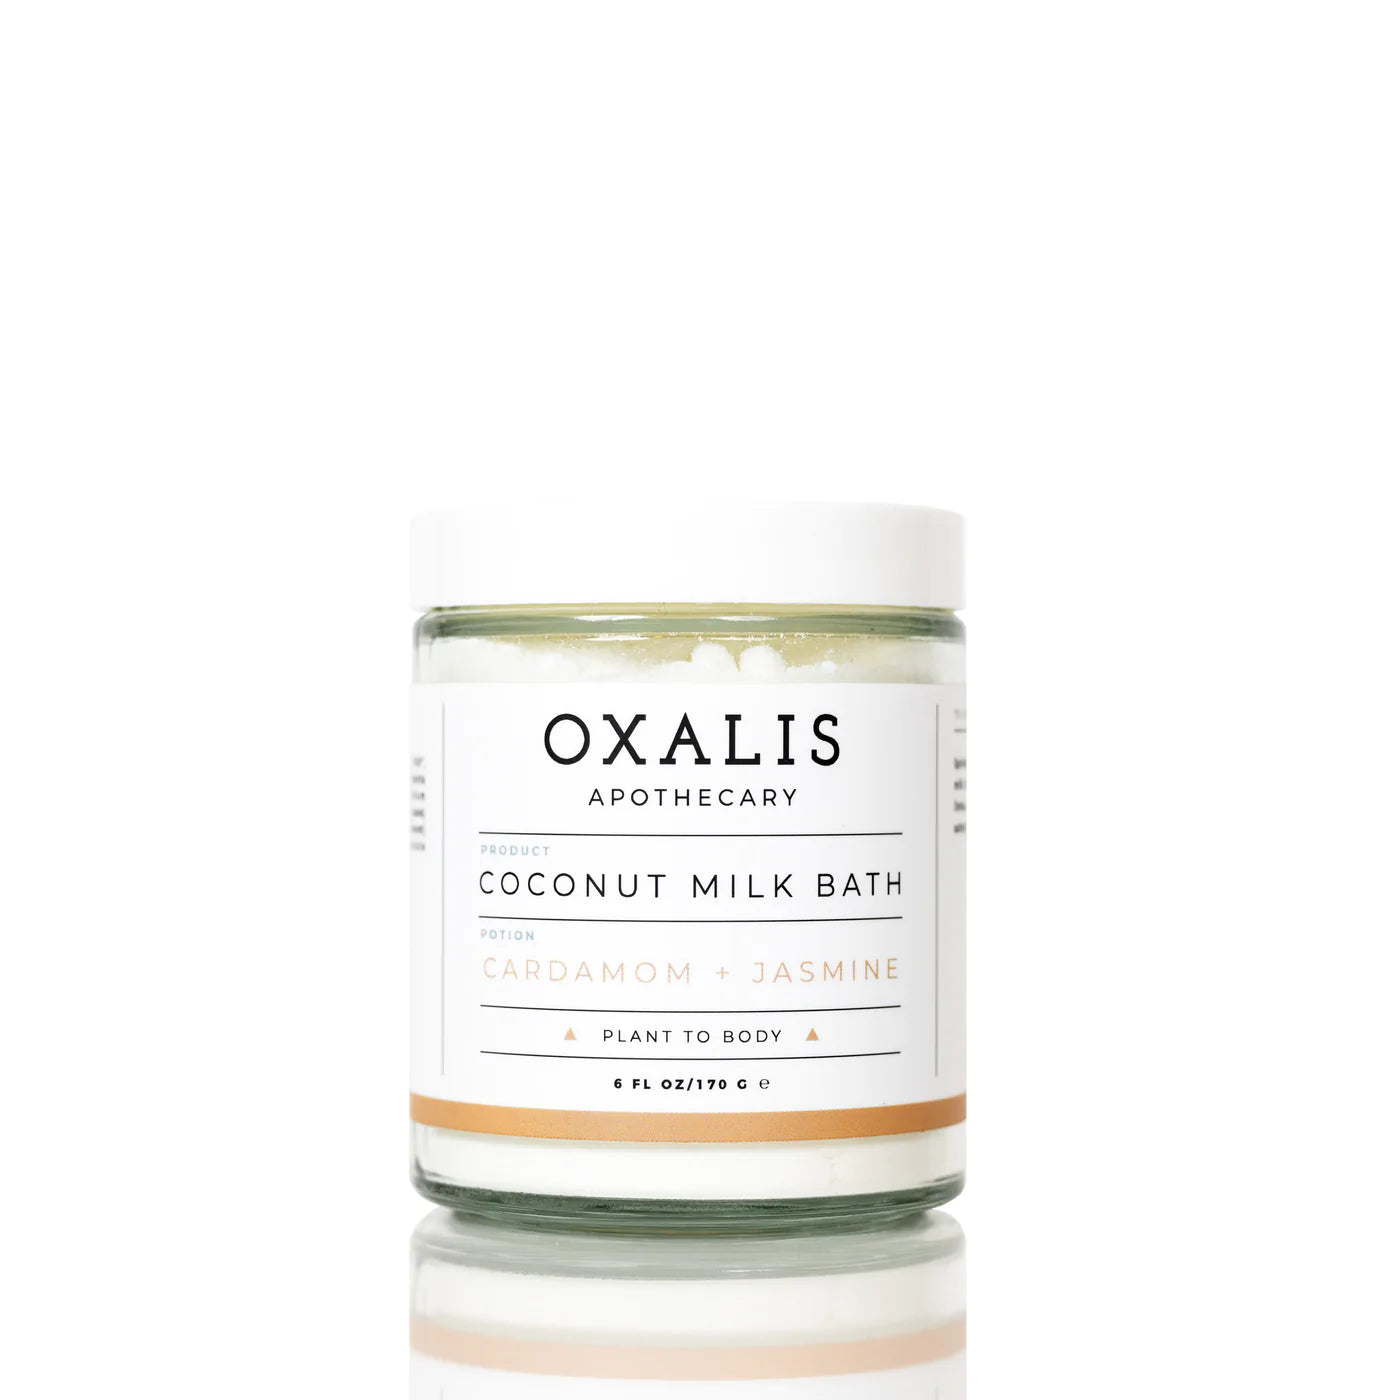 Oxalis Coconut Milk Bath - Cardamom Jasmine